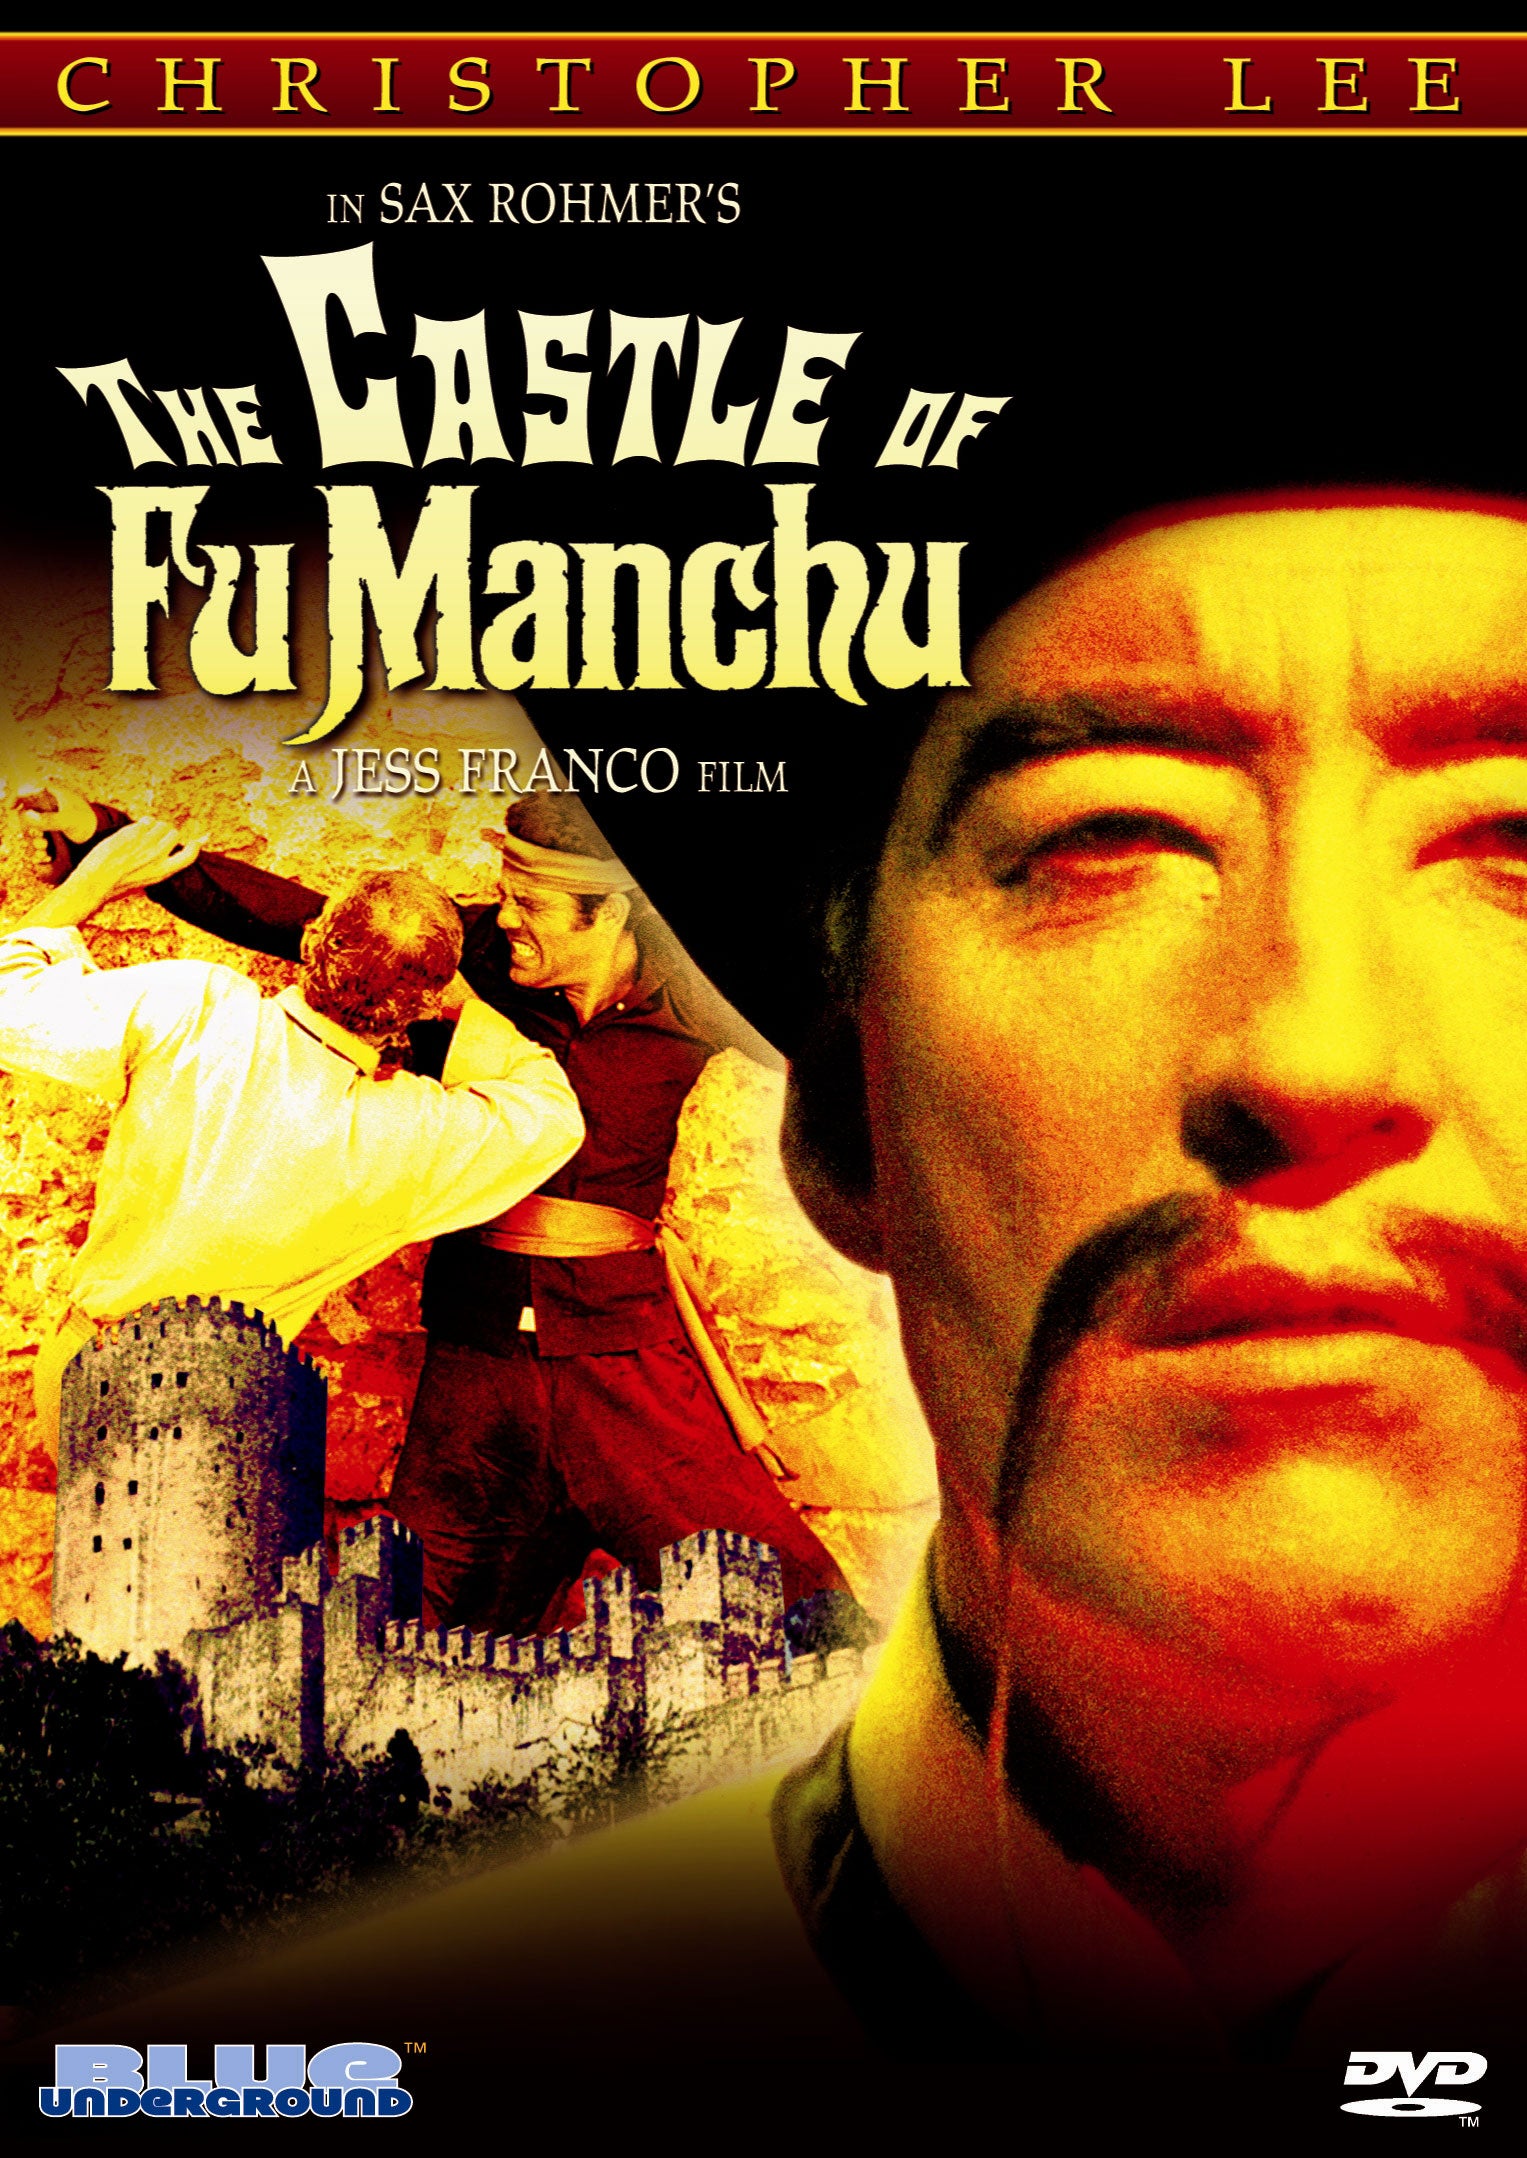 THE CASTLE OF FU MANCHU DVD